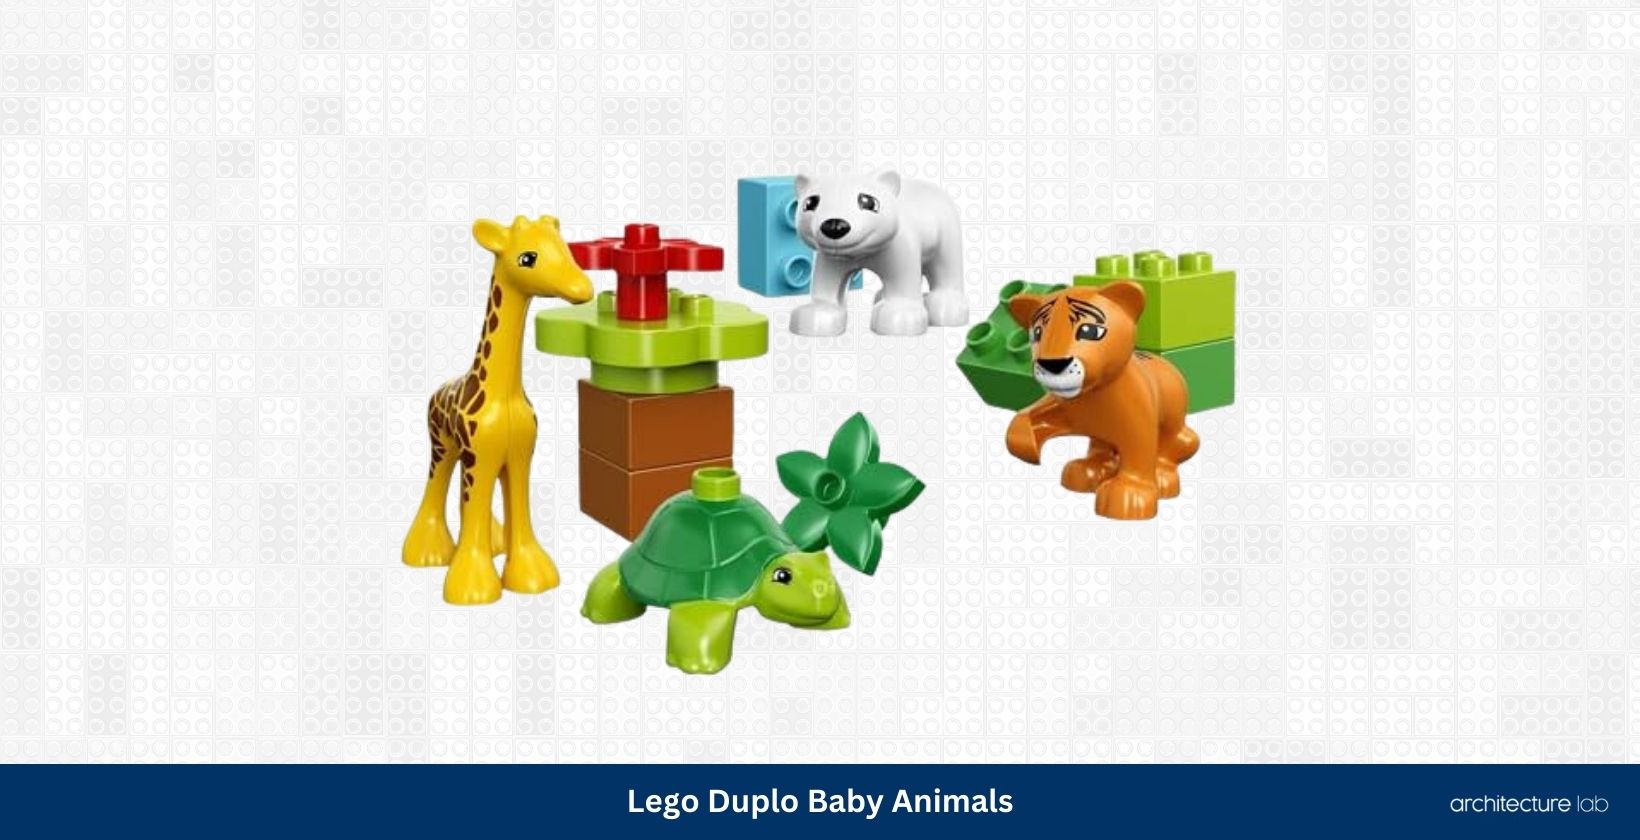 Lego duplo baby animals